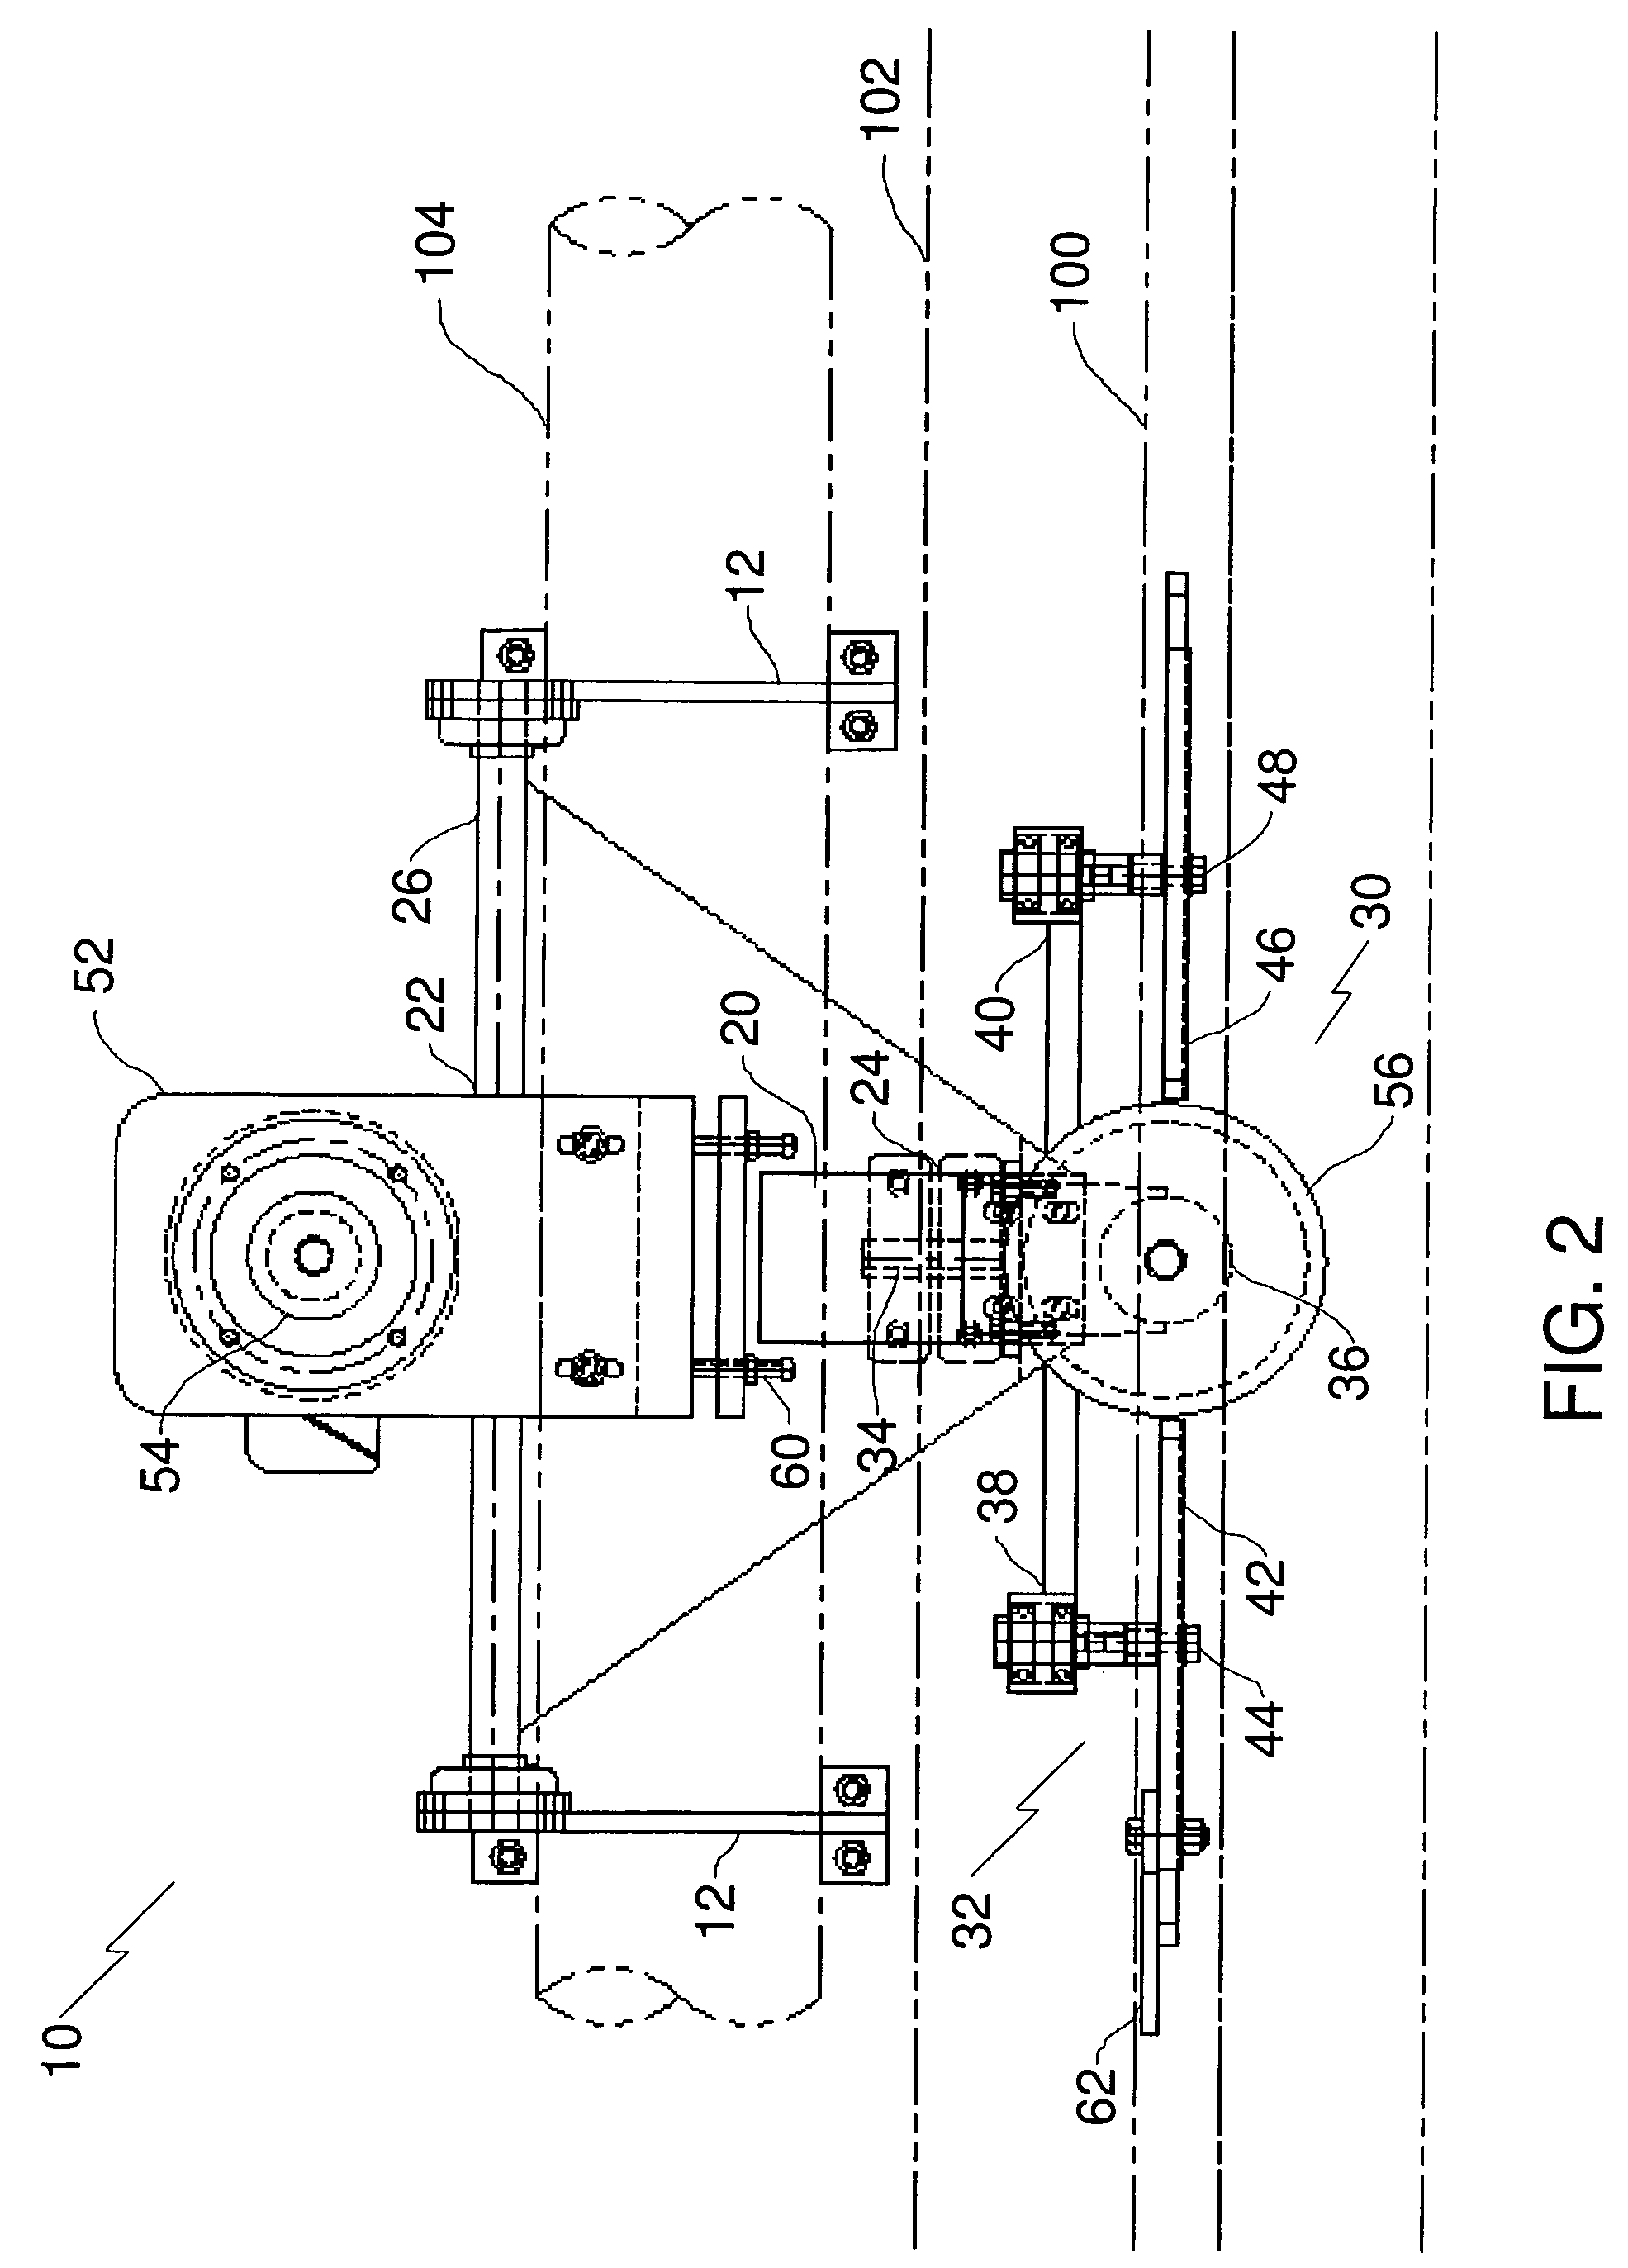 Rail grooming machine and method of use